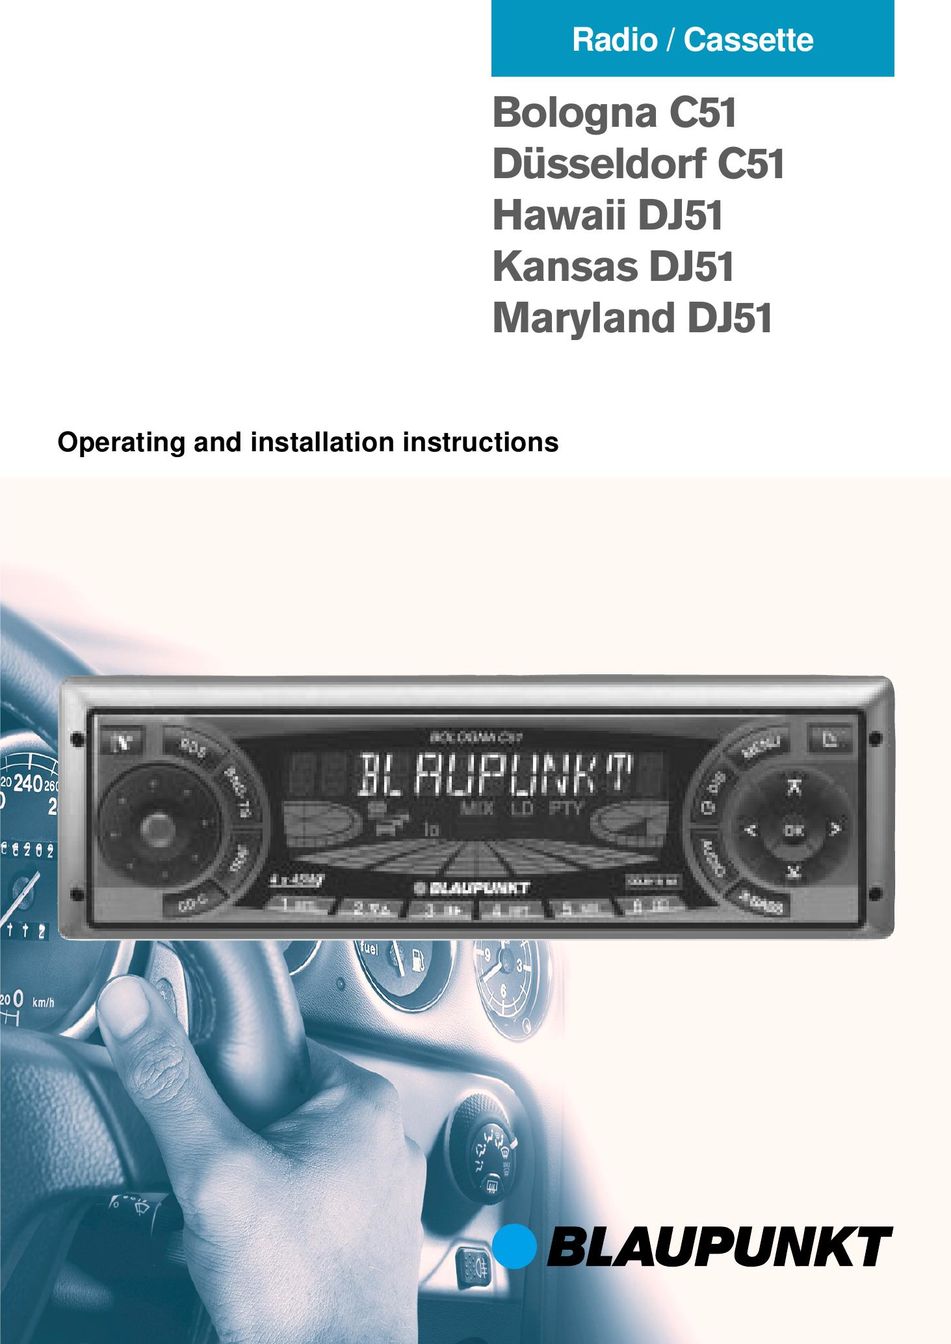 Blaupunkt Maryland DJ51 Portable Radio User Manual